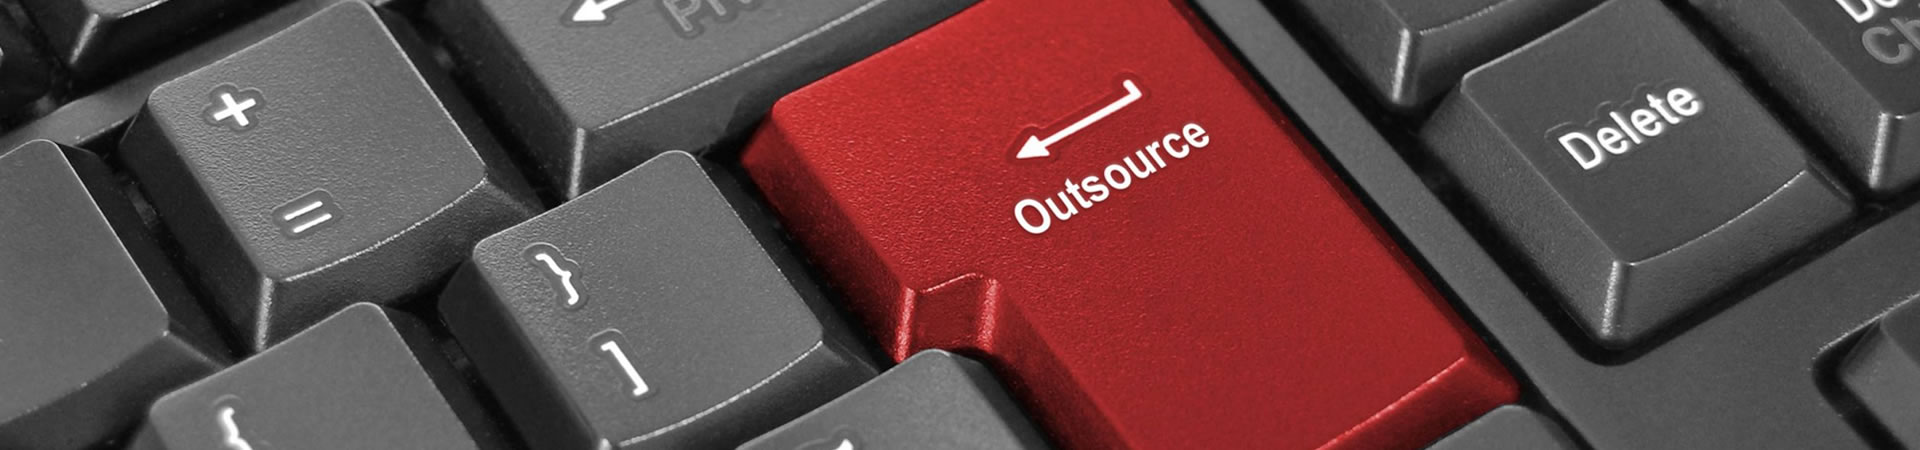 nti_slide_outsourcing